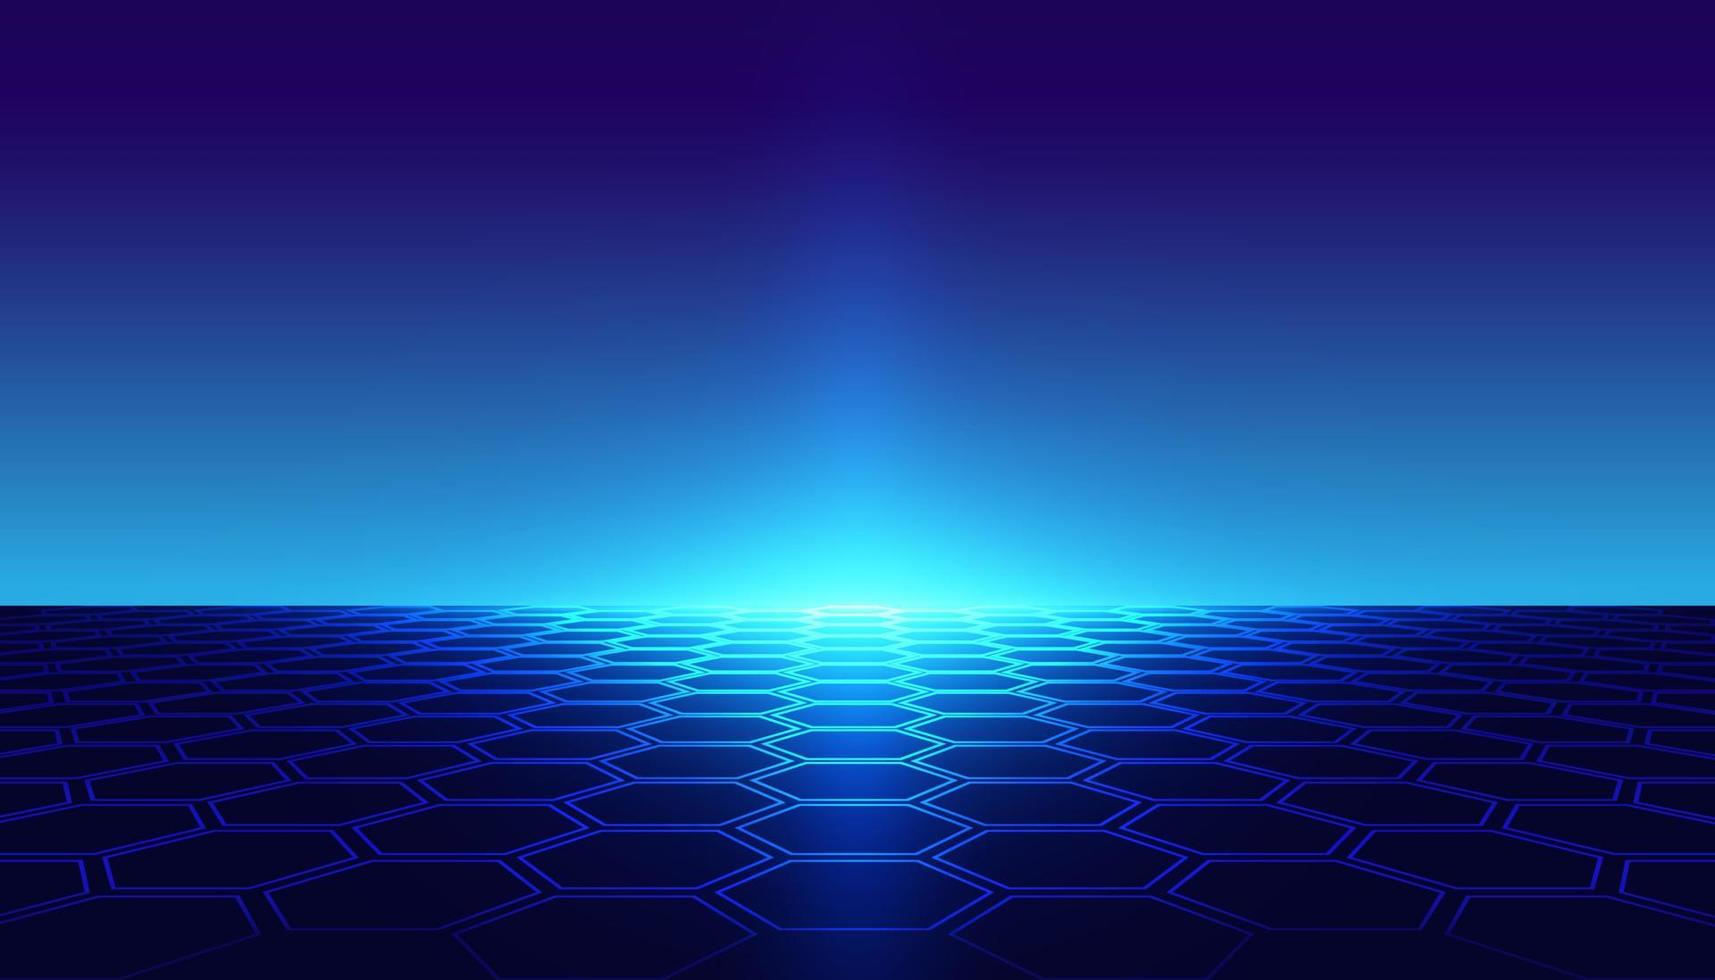 abstract Backgrounds hexagon horizon blue 80's 90's retro Vector virtual world game virtual reality in cinema or future